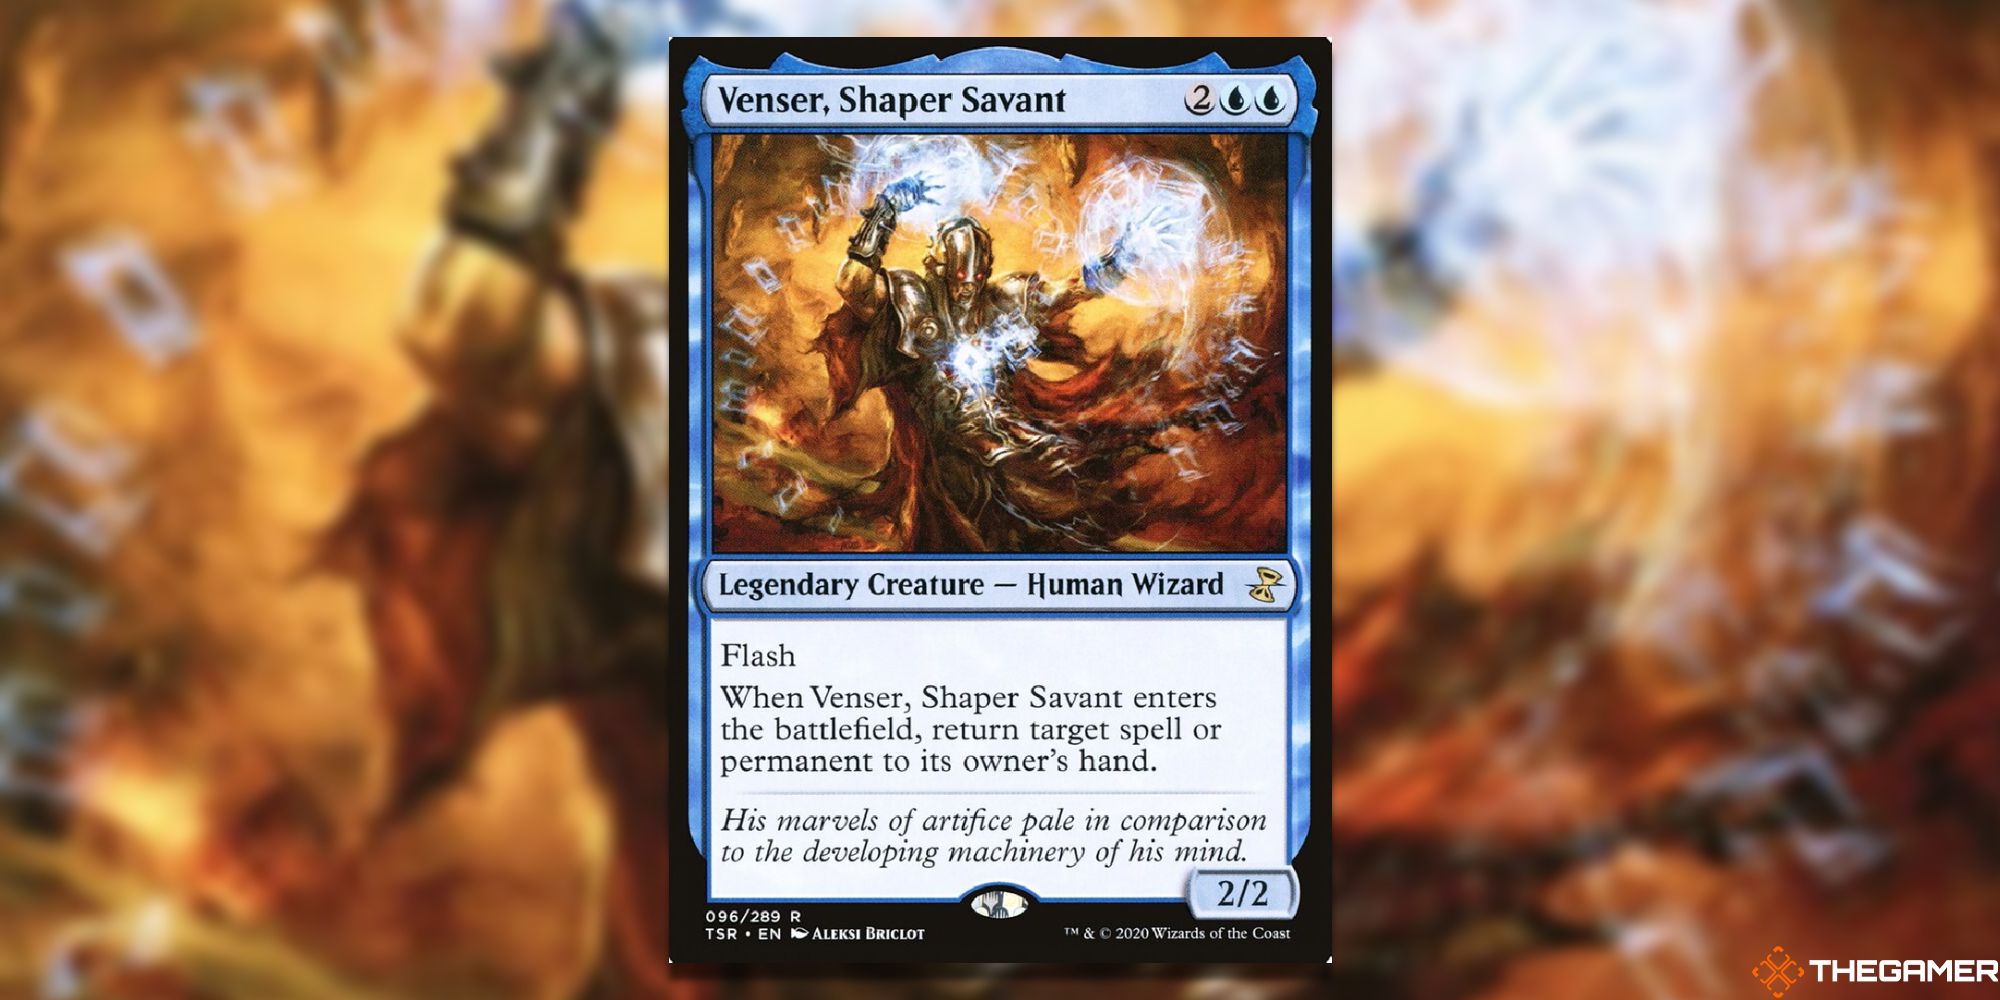 Venser, Shaper Savant full card with background